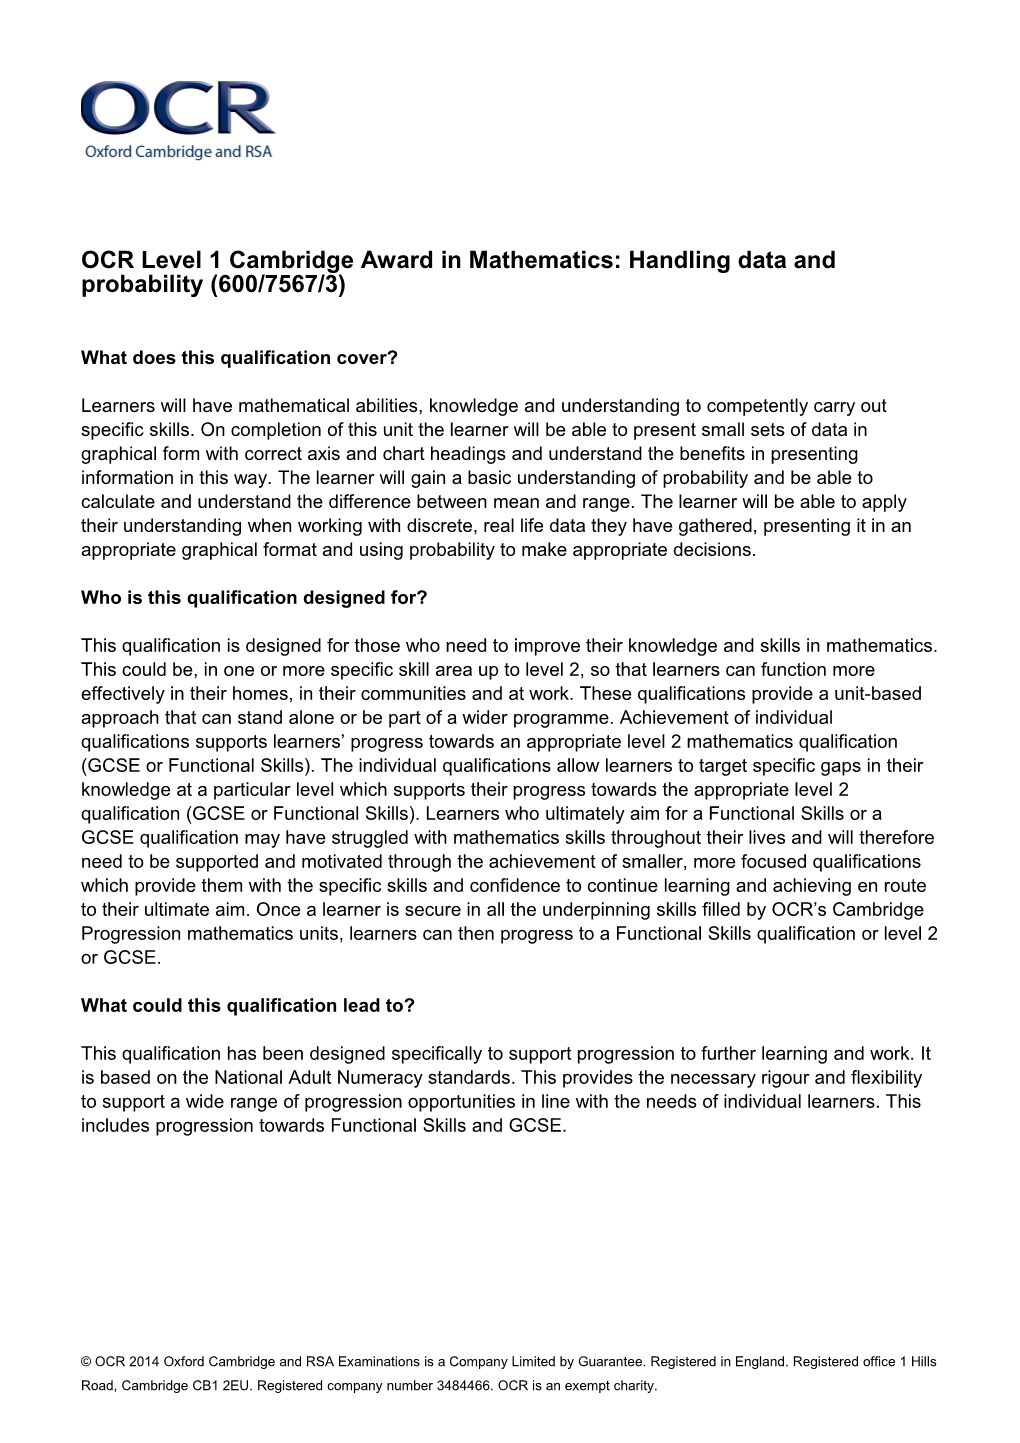 OCR Level 1 Cambridge Award in Mathematics: Handling Data and Probability (600/7567/3)